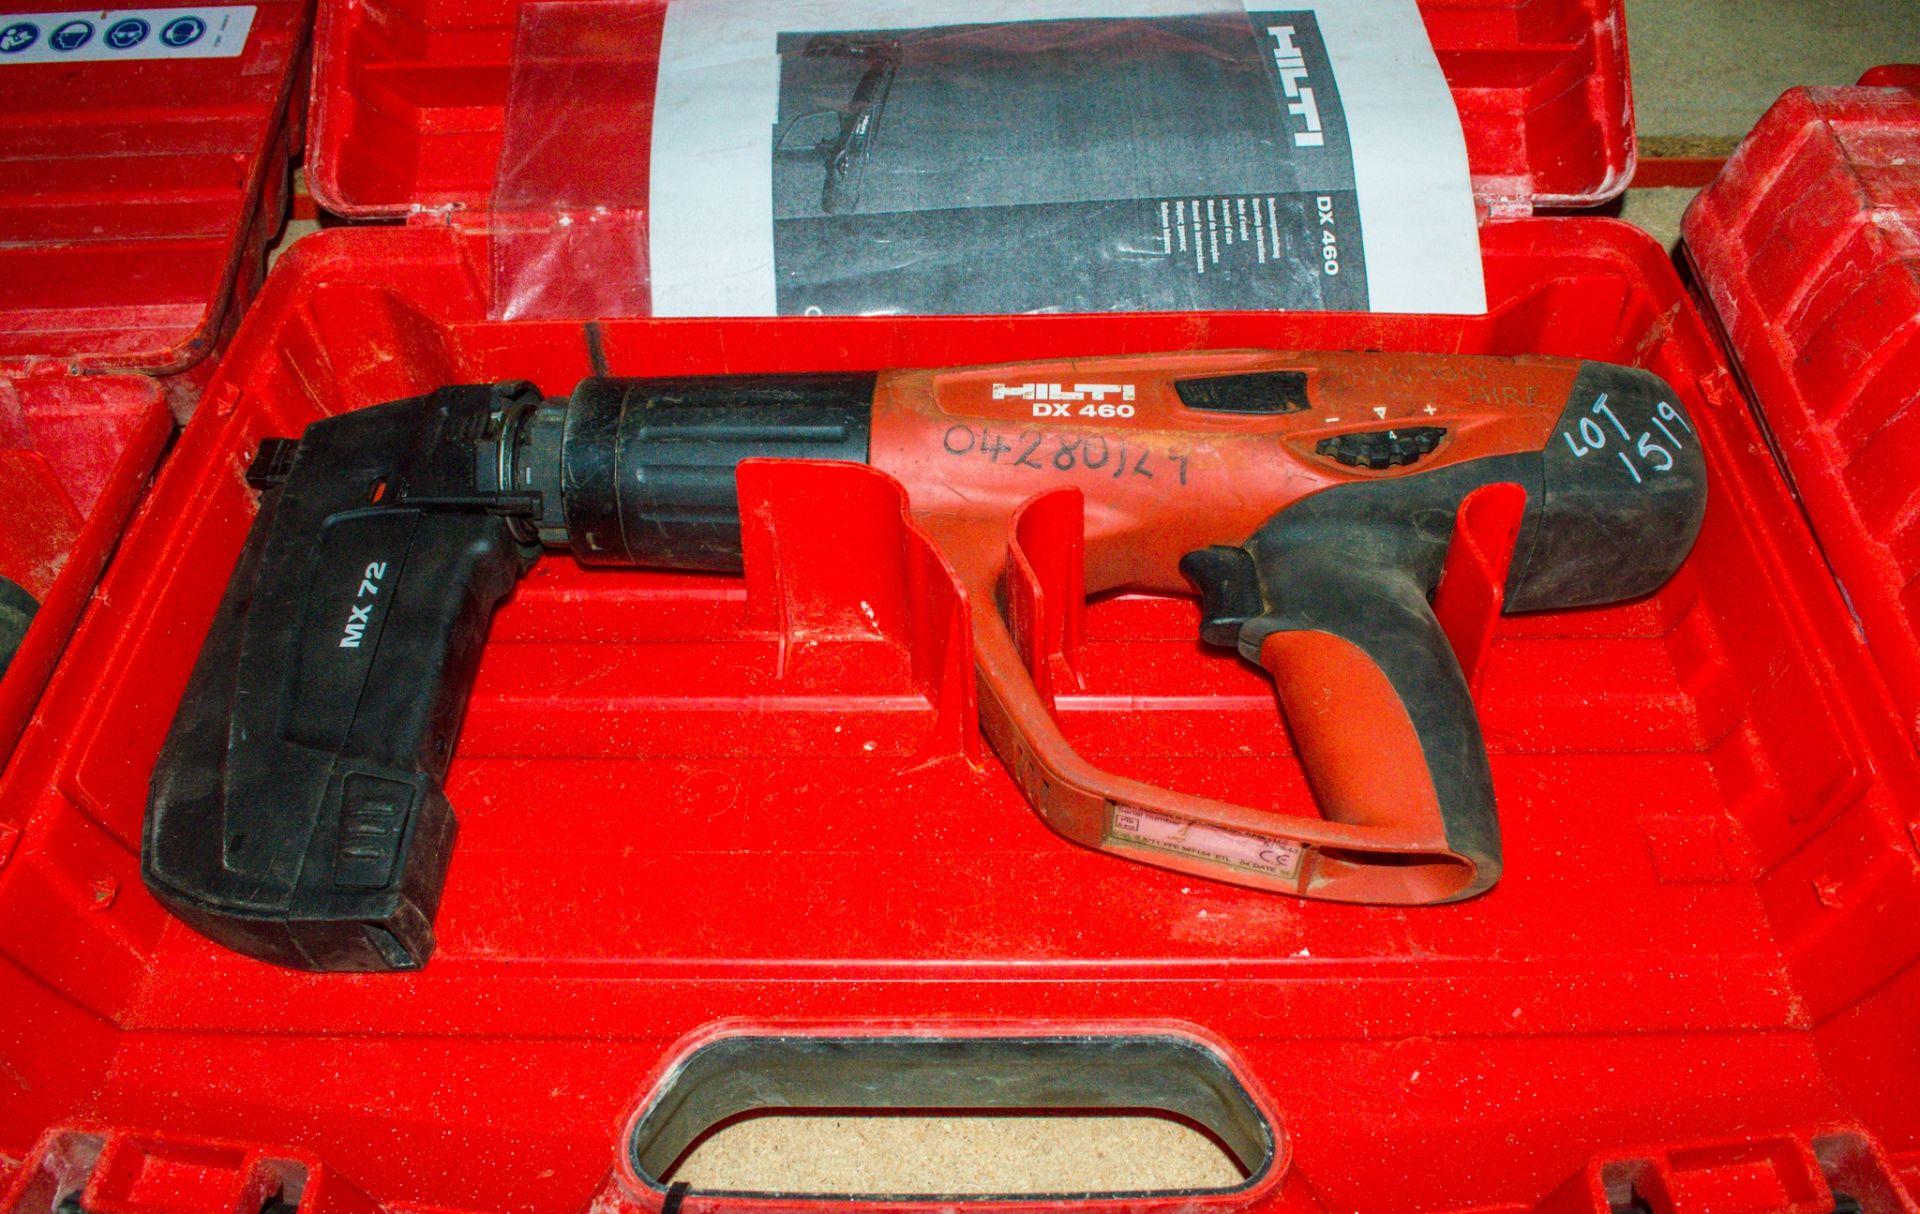 Hilti DX460 nail gun c/w carry case 04280129